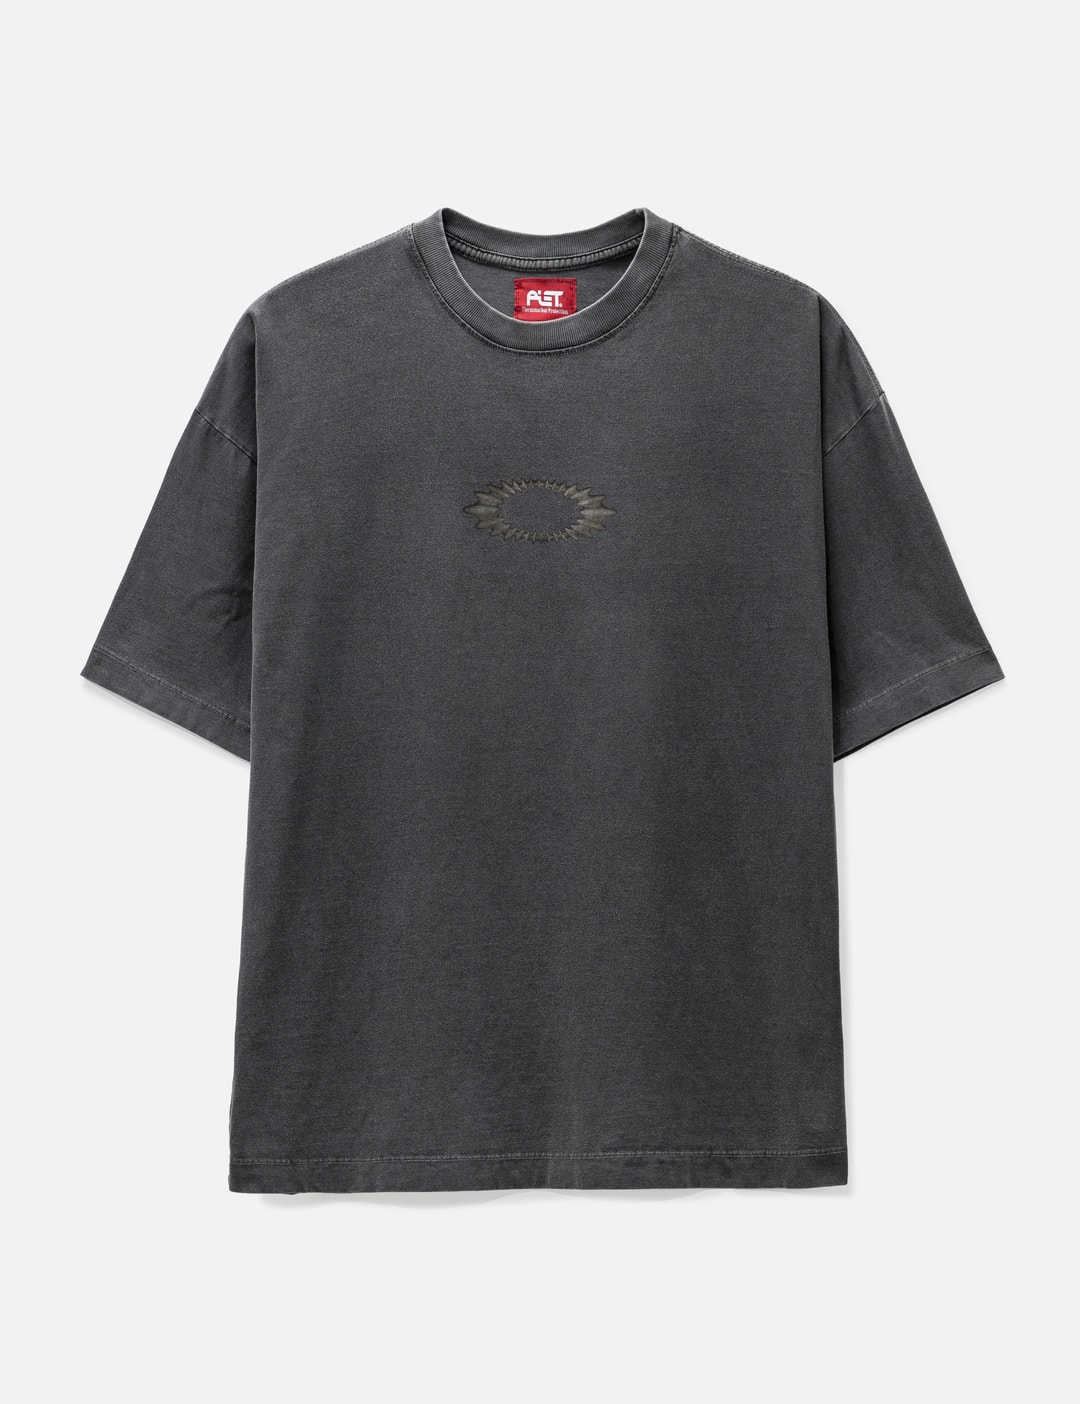 Camiseta Piet Metal 2.0 T-Shirt Cinza - NewSkull